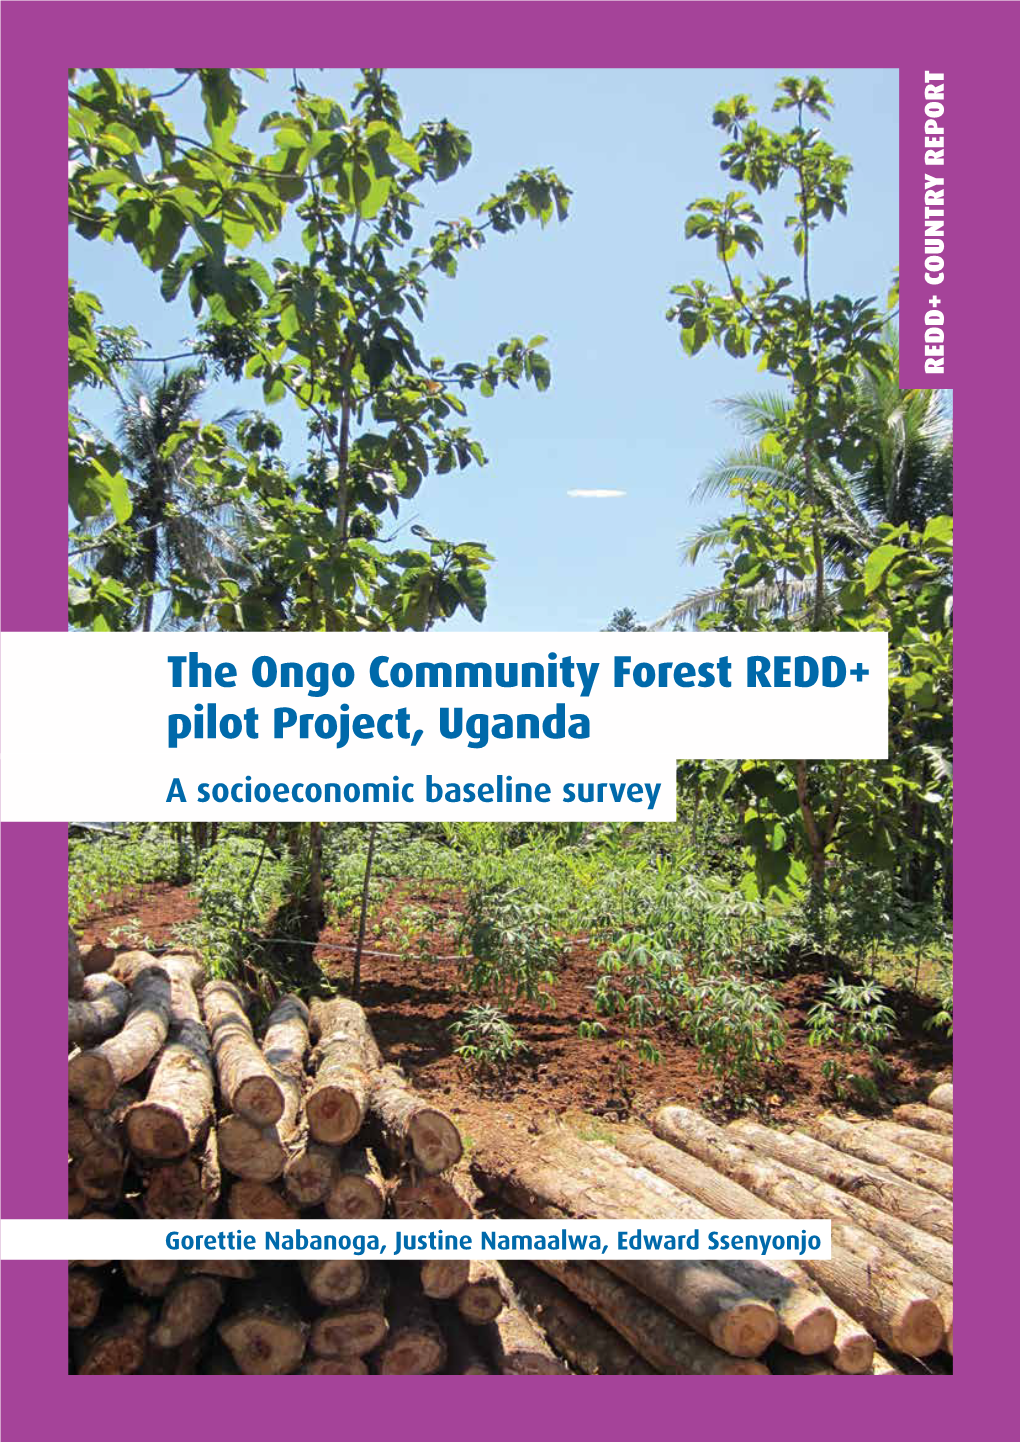 The Ongo Community Forest REDD+ Pilot Project, Uganda a Socioeconomic Baseline Survey